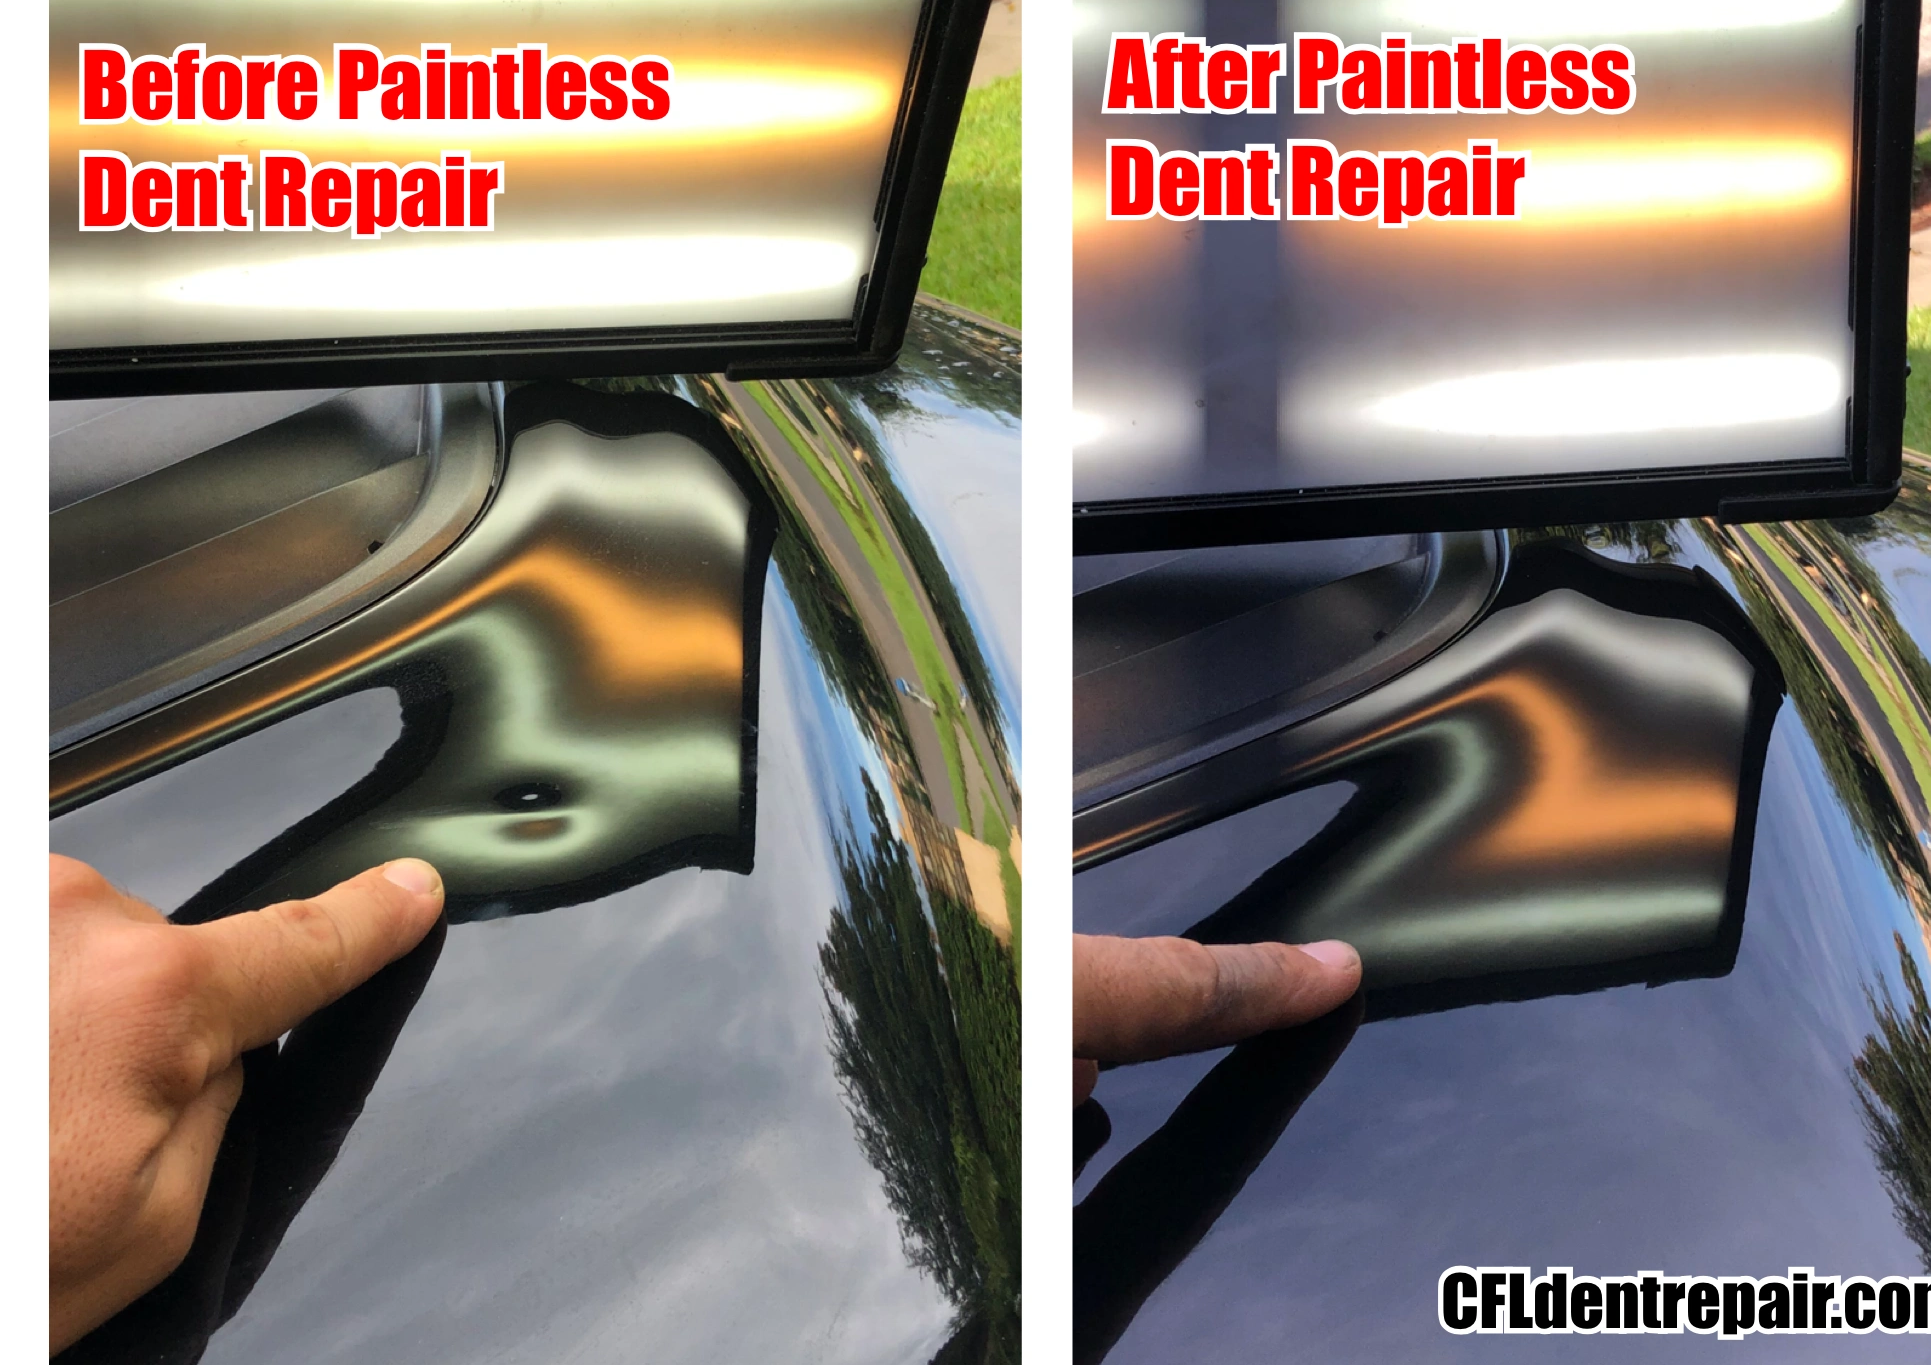 Central Florida Dent Repair Dodge Ram Paintless Dent Removal Mobile PDR Near Me Fix Car Sanford Lake